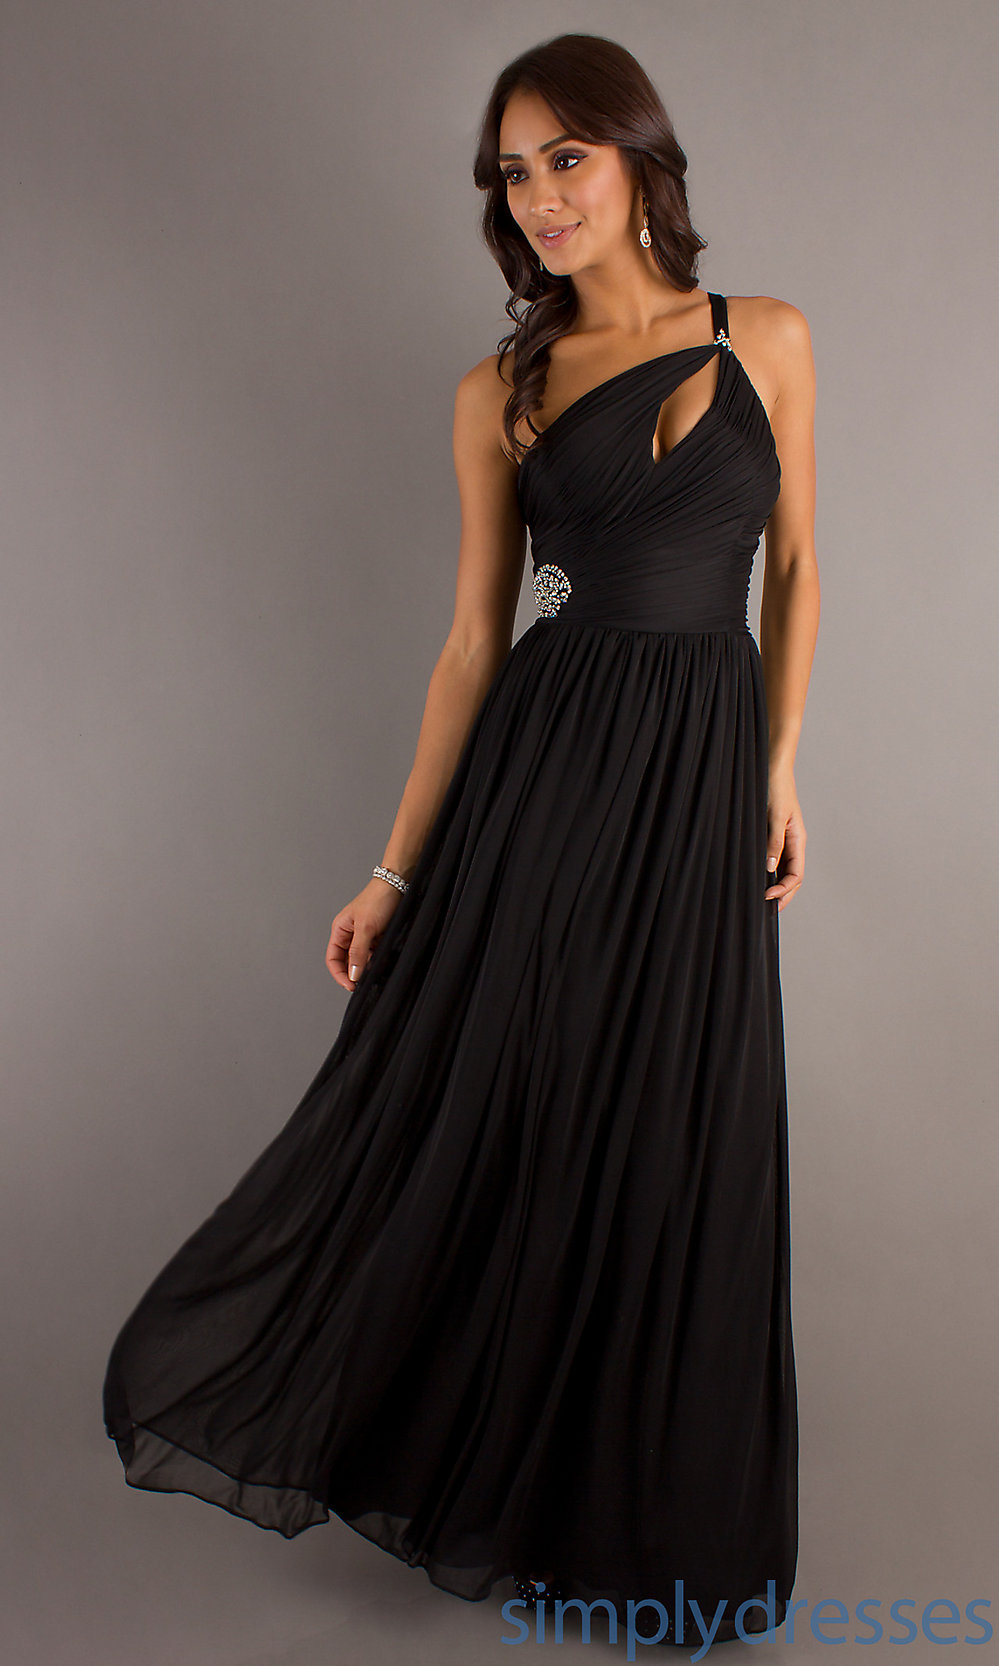 Black Simple Formal Dress & Online Fashion Review